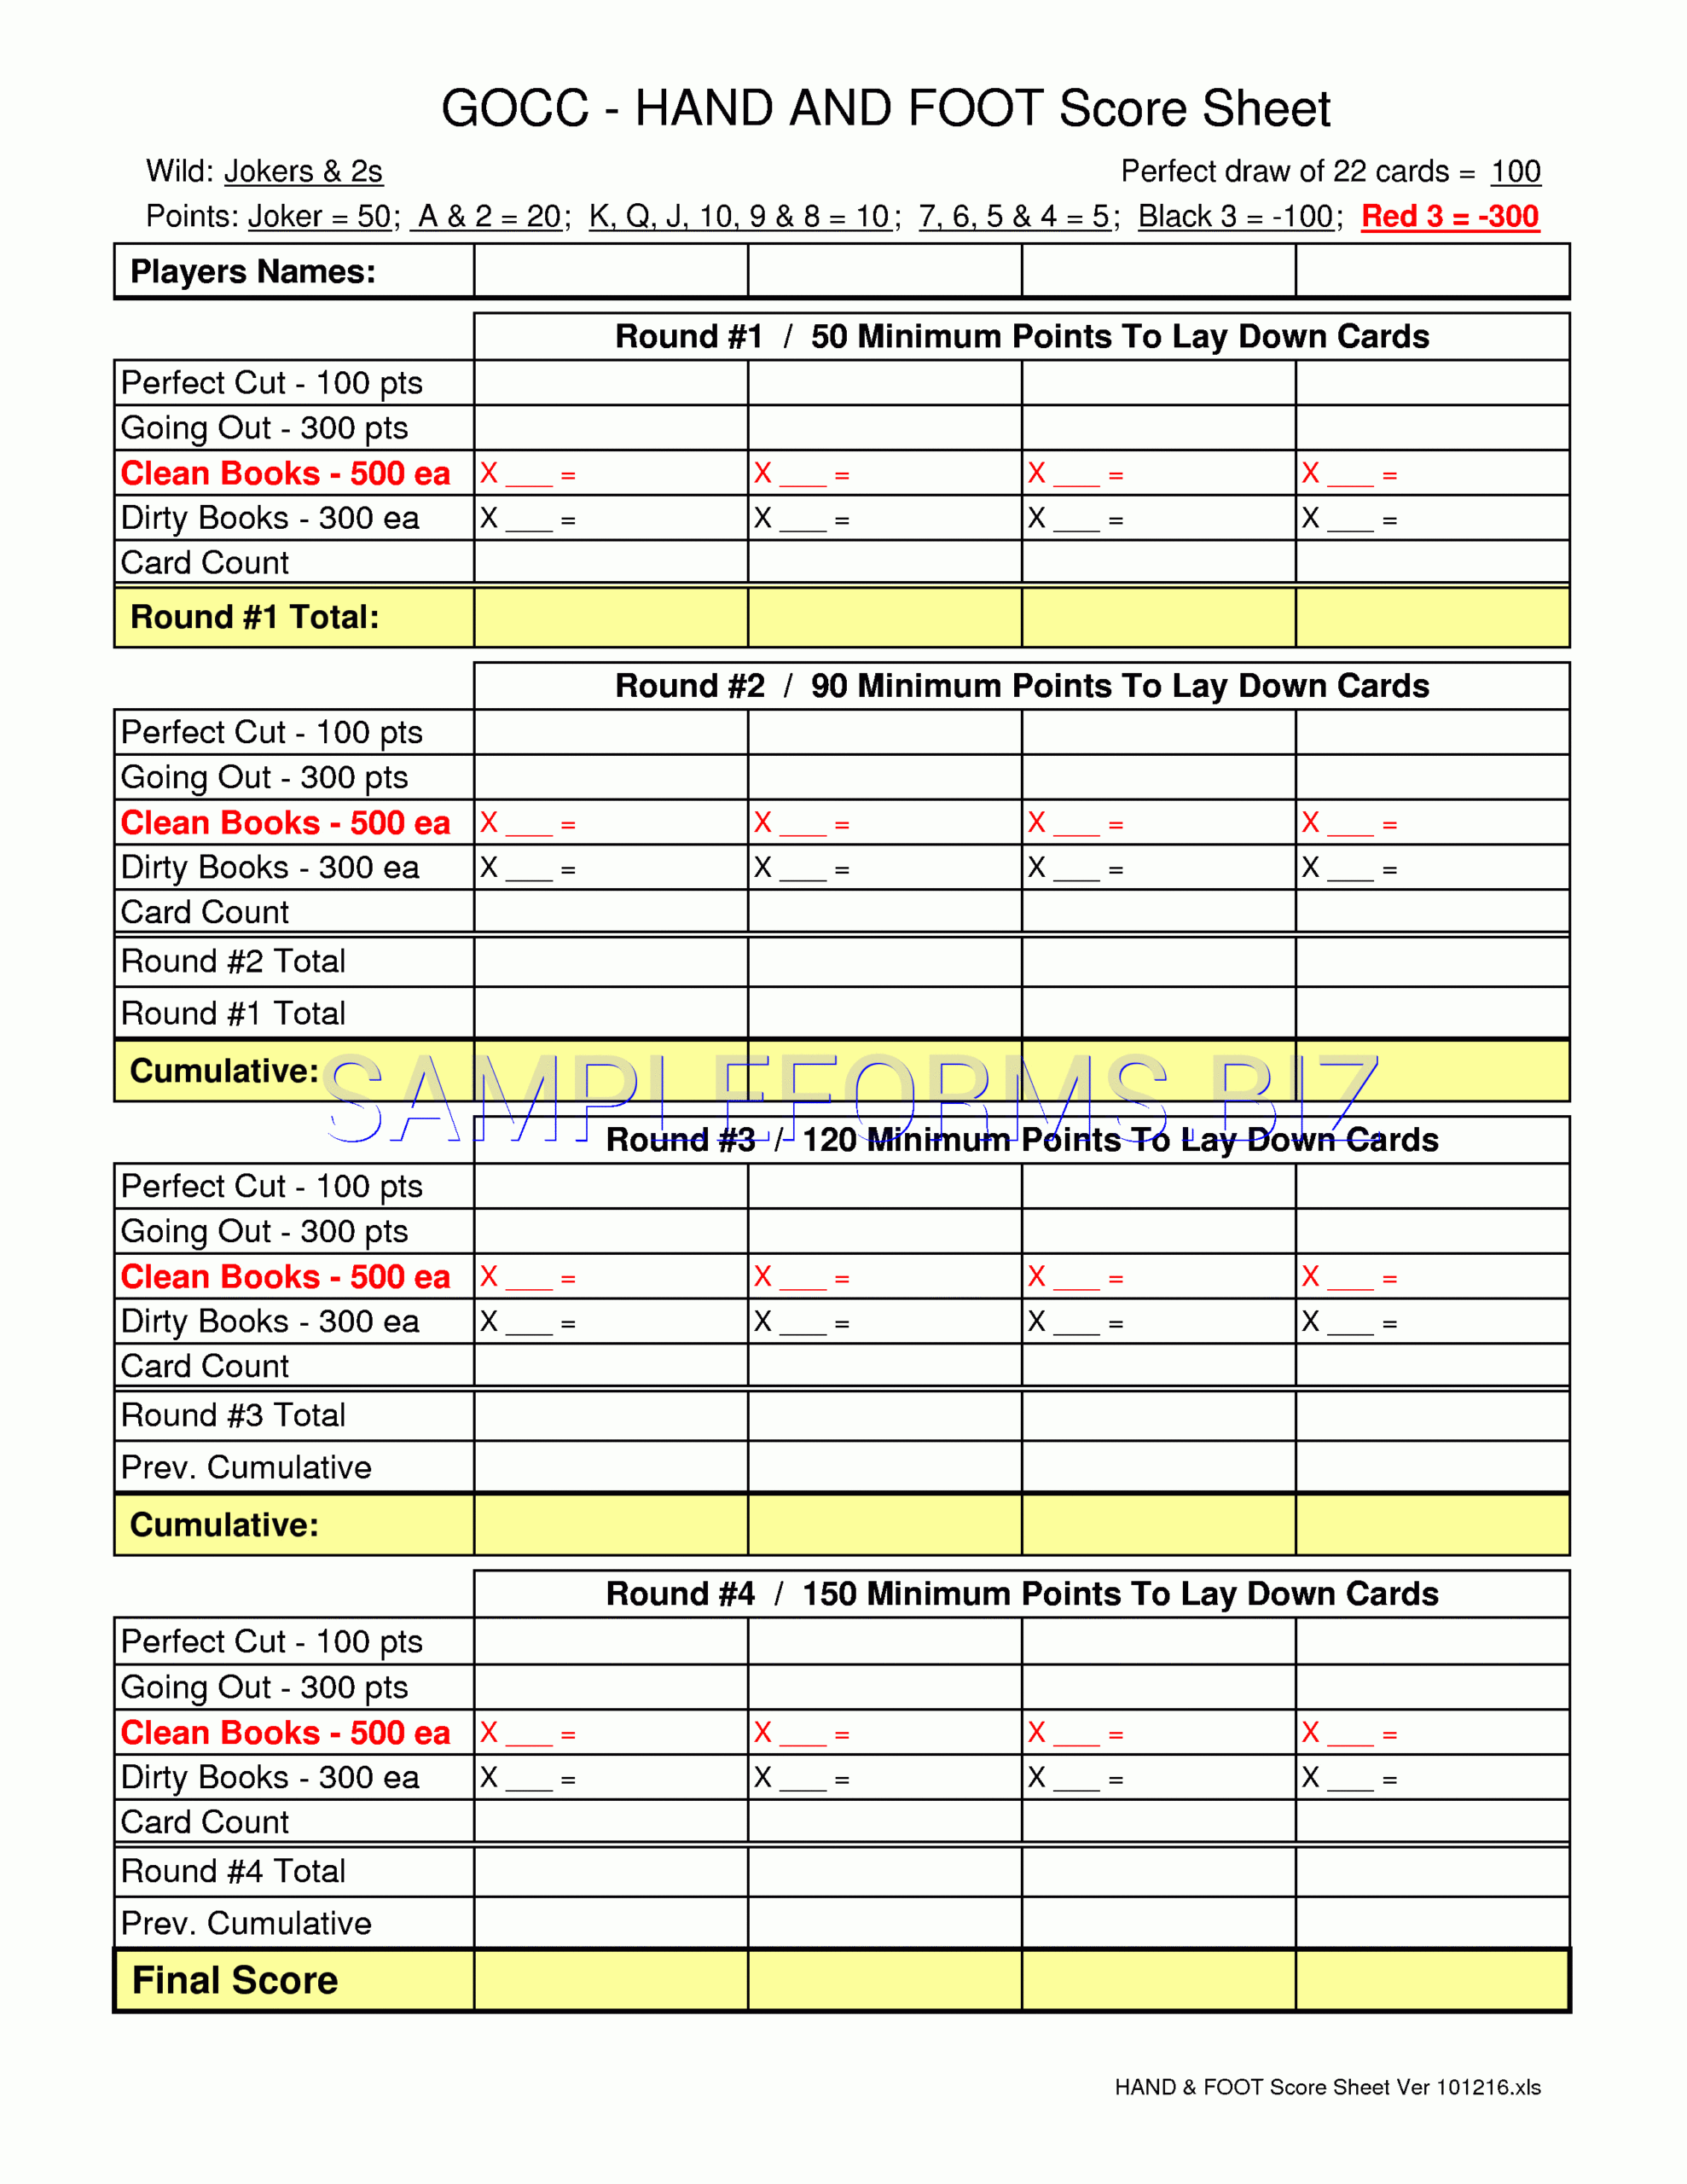 Preview Pdf Hand & Foot Score Sheet 2, 1 Throughout Bridge Score Card Template